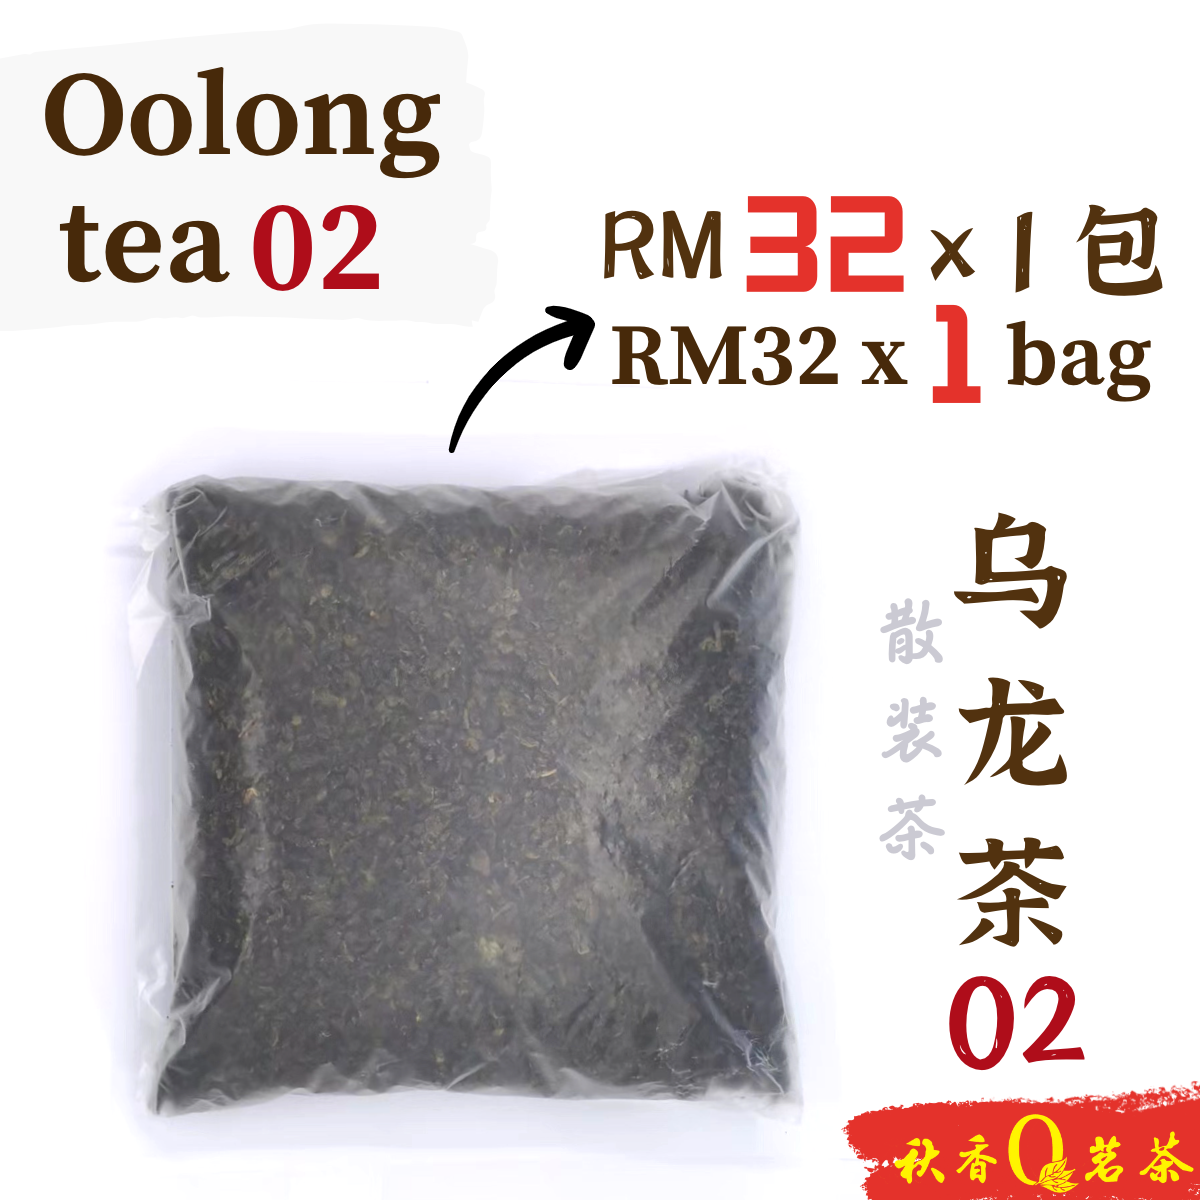 乌龙茶 02 Oolong Tea 02 【1kg】